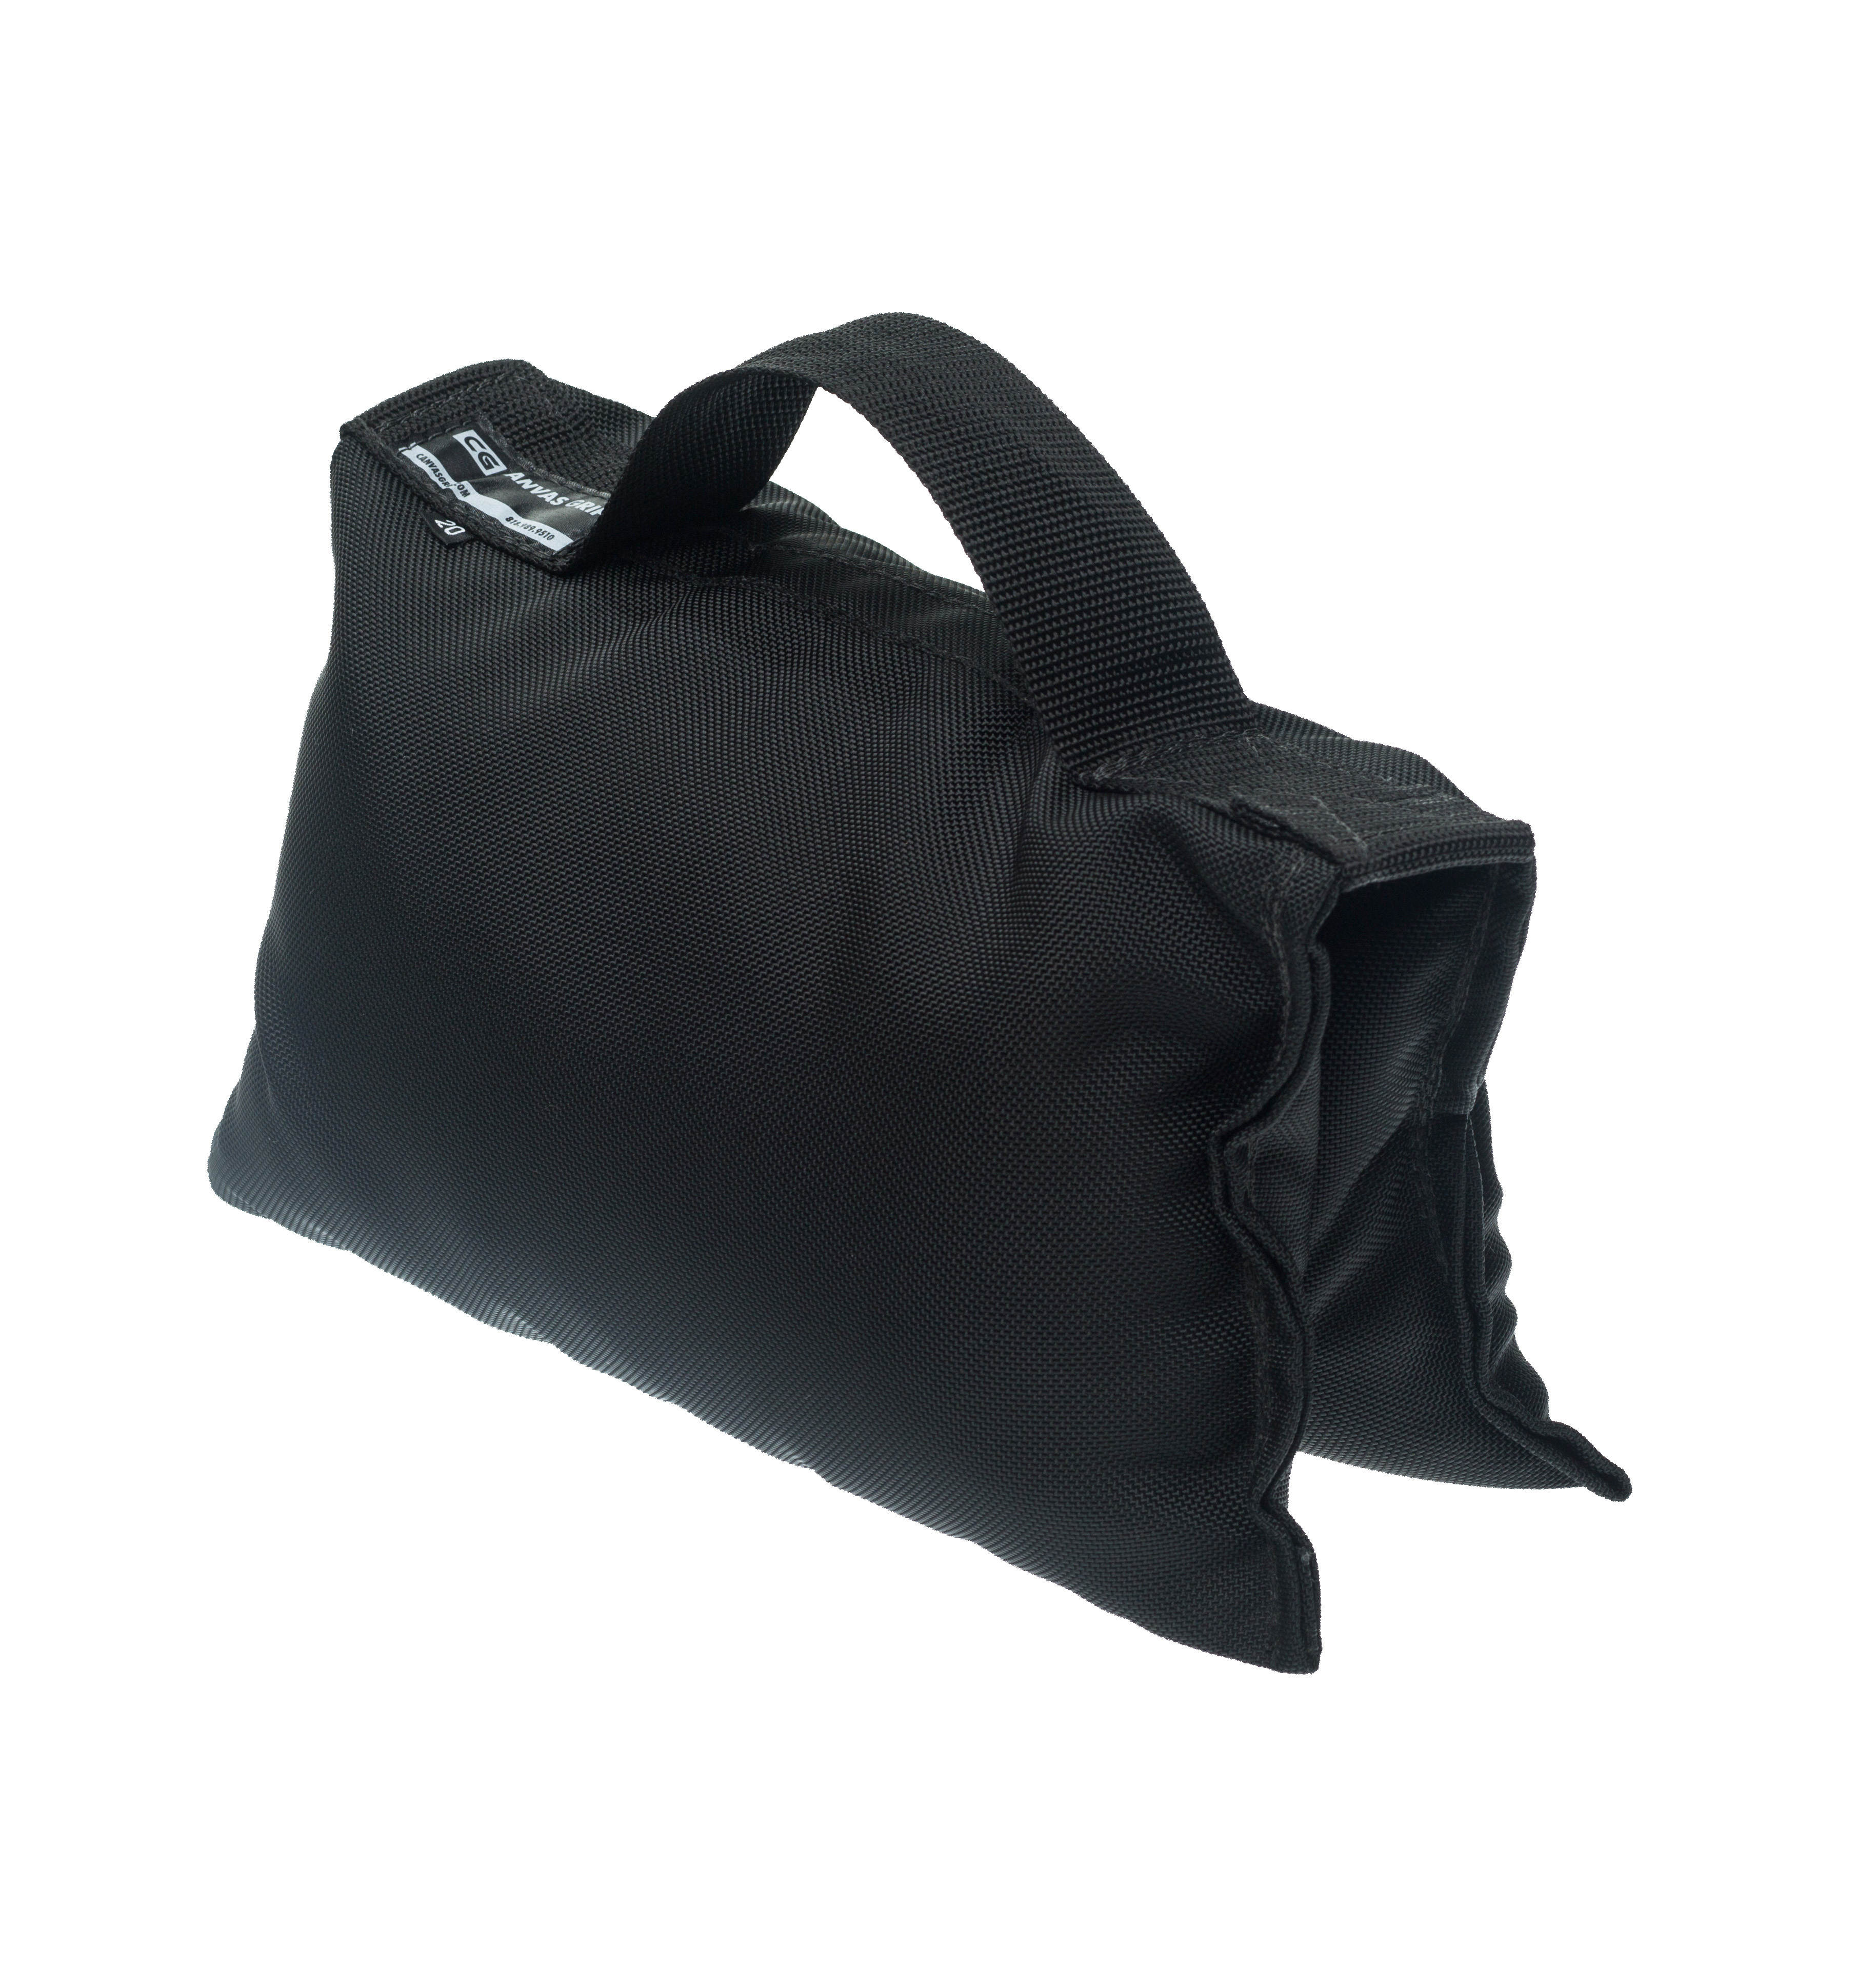 CANVAS GRIP | High quality grip equipment.: 20 Lbs Sandbag